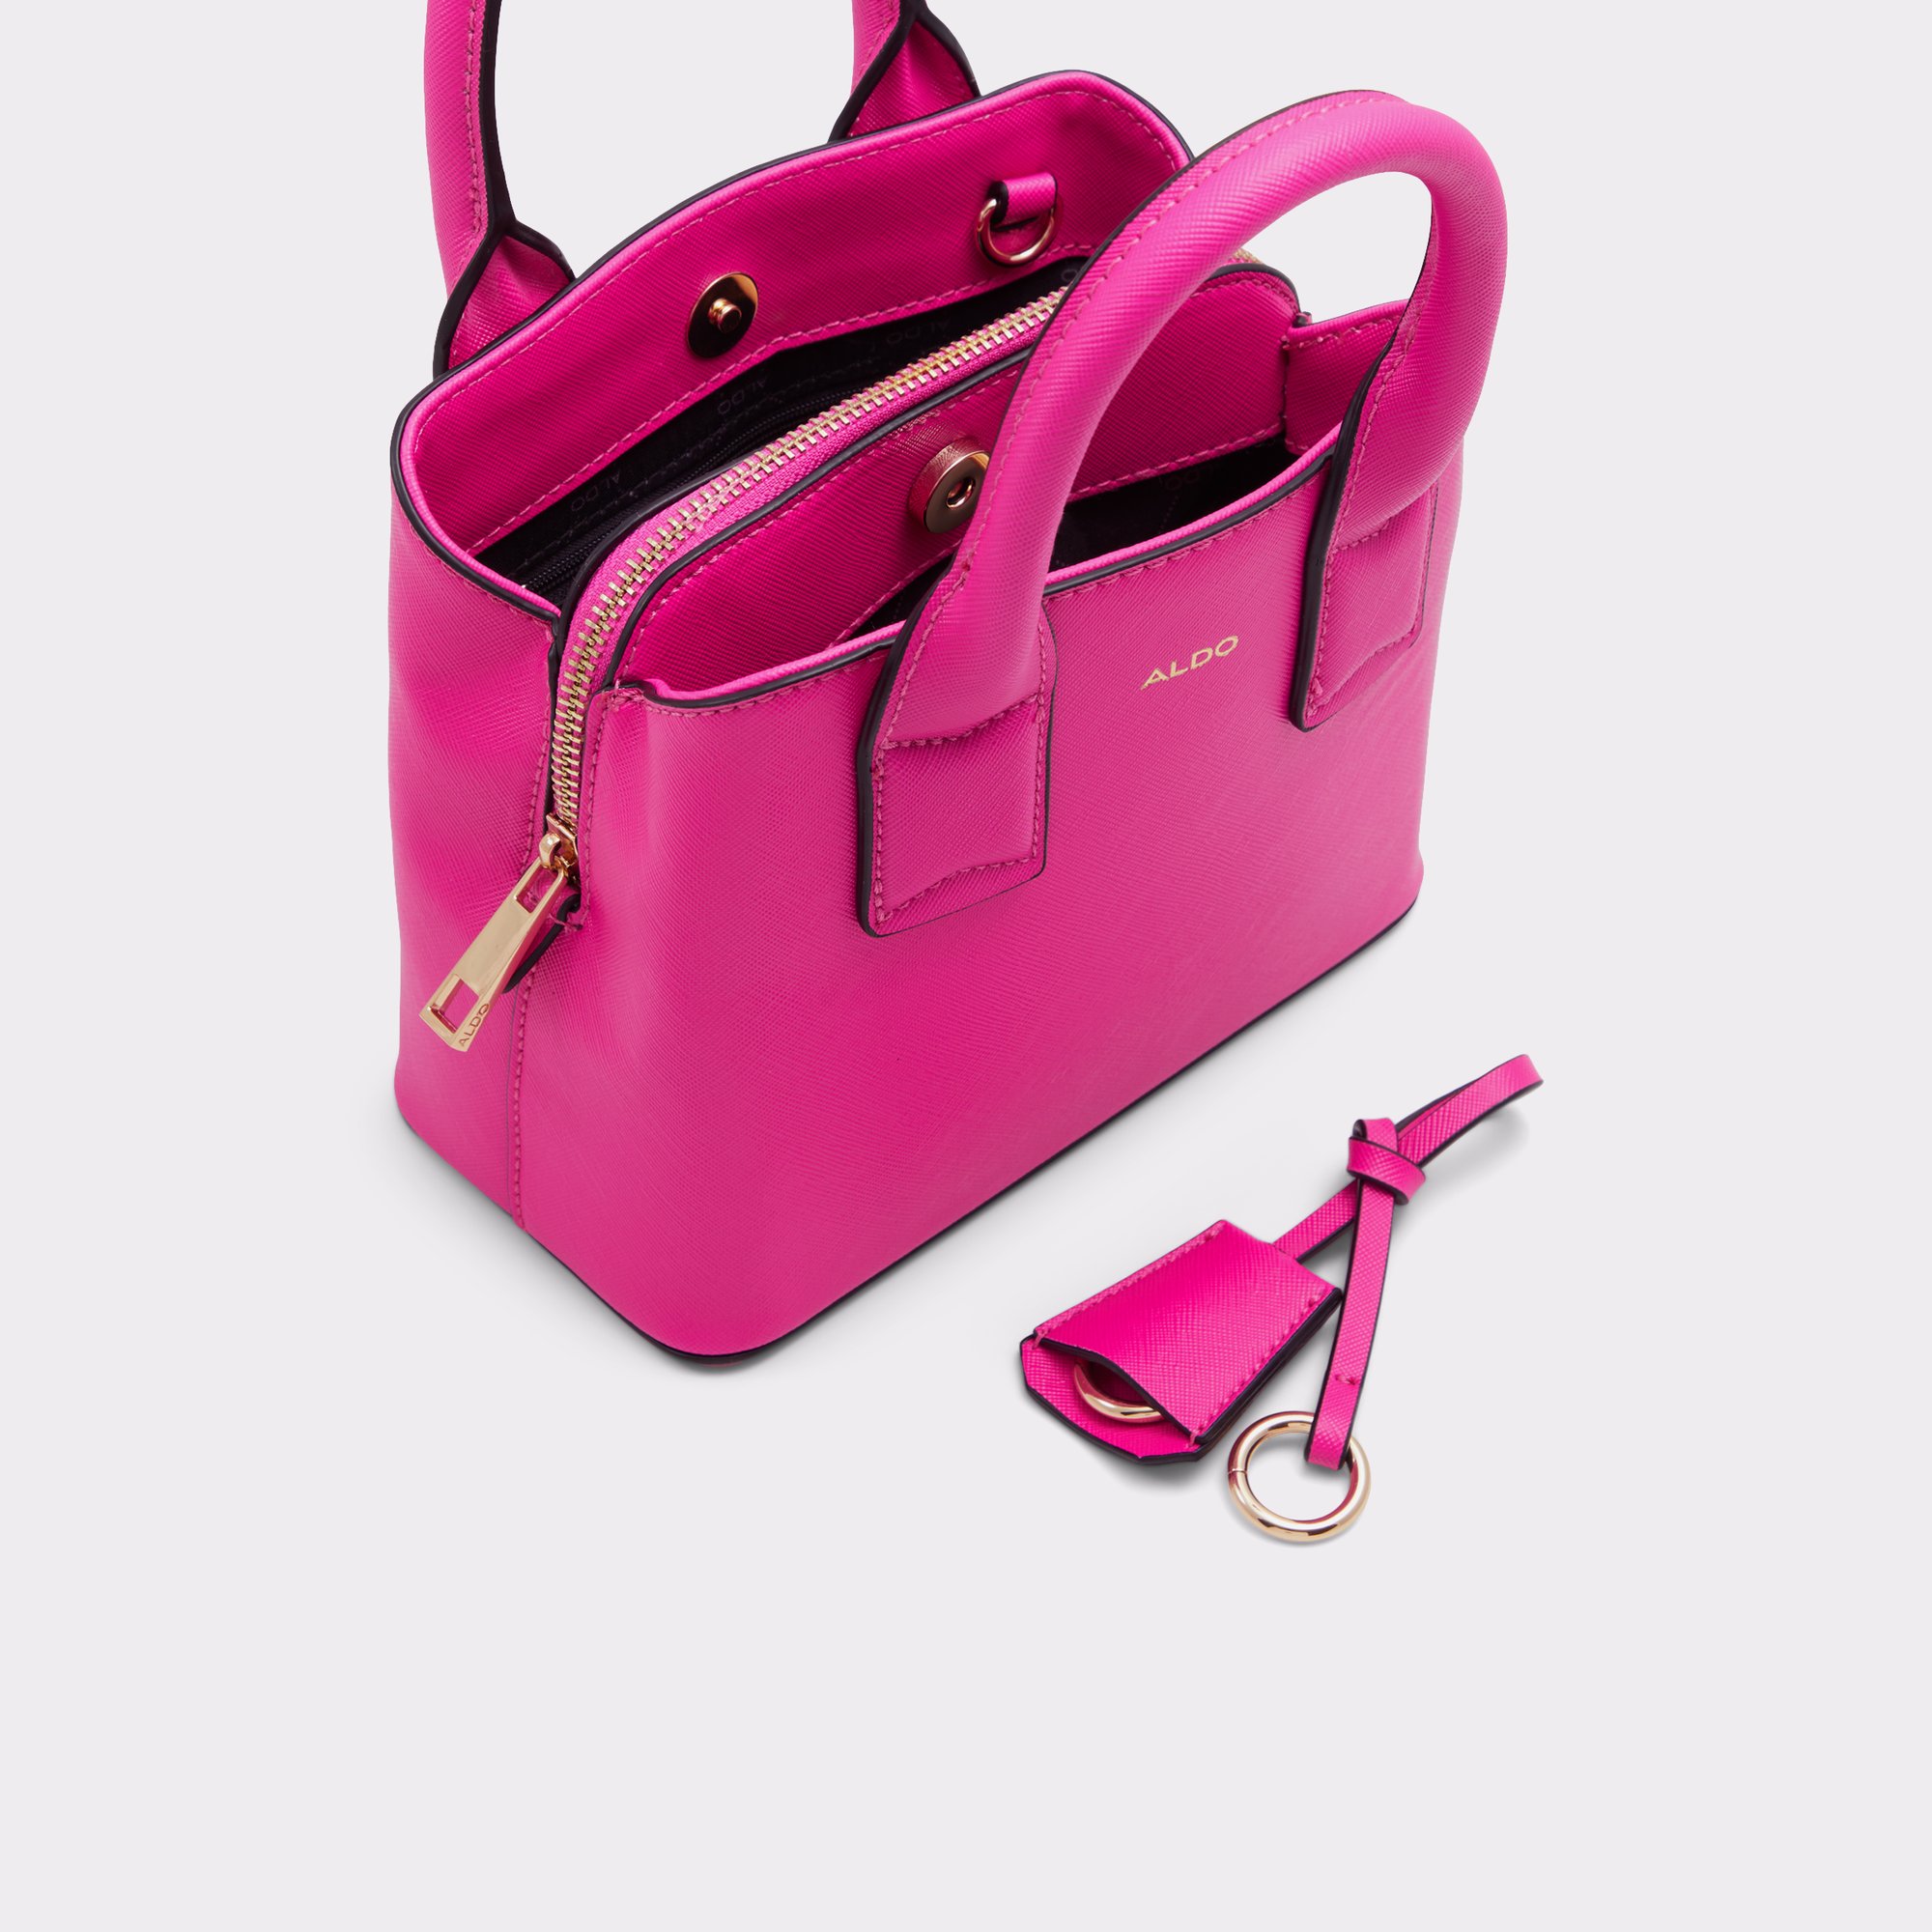 Adaemas Dark Pink Women's Top Handle Bags | ALDO US